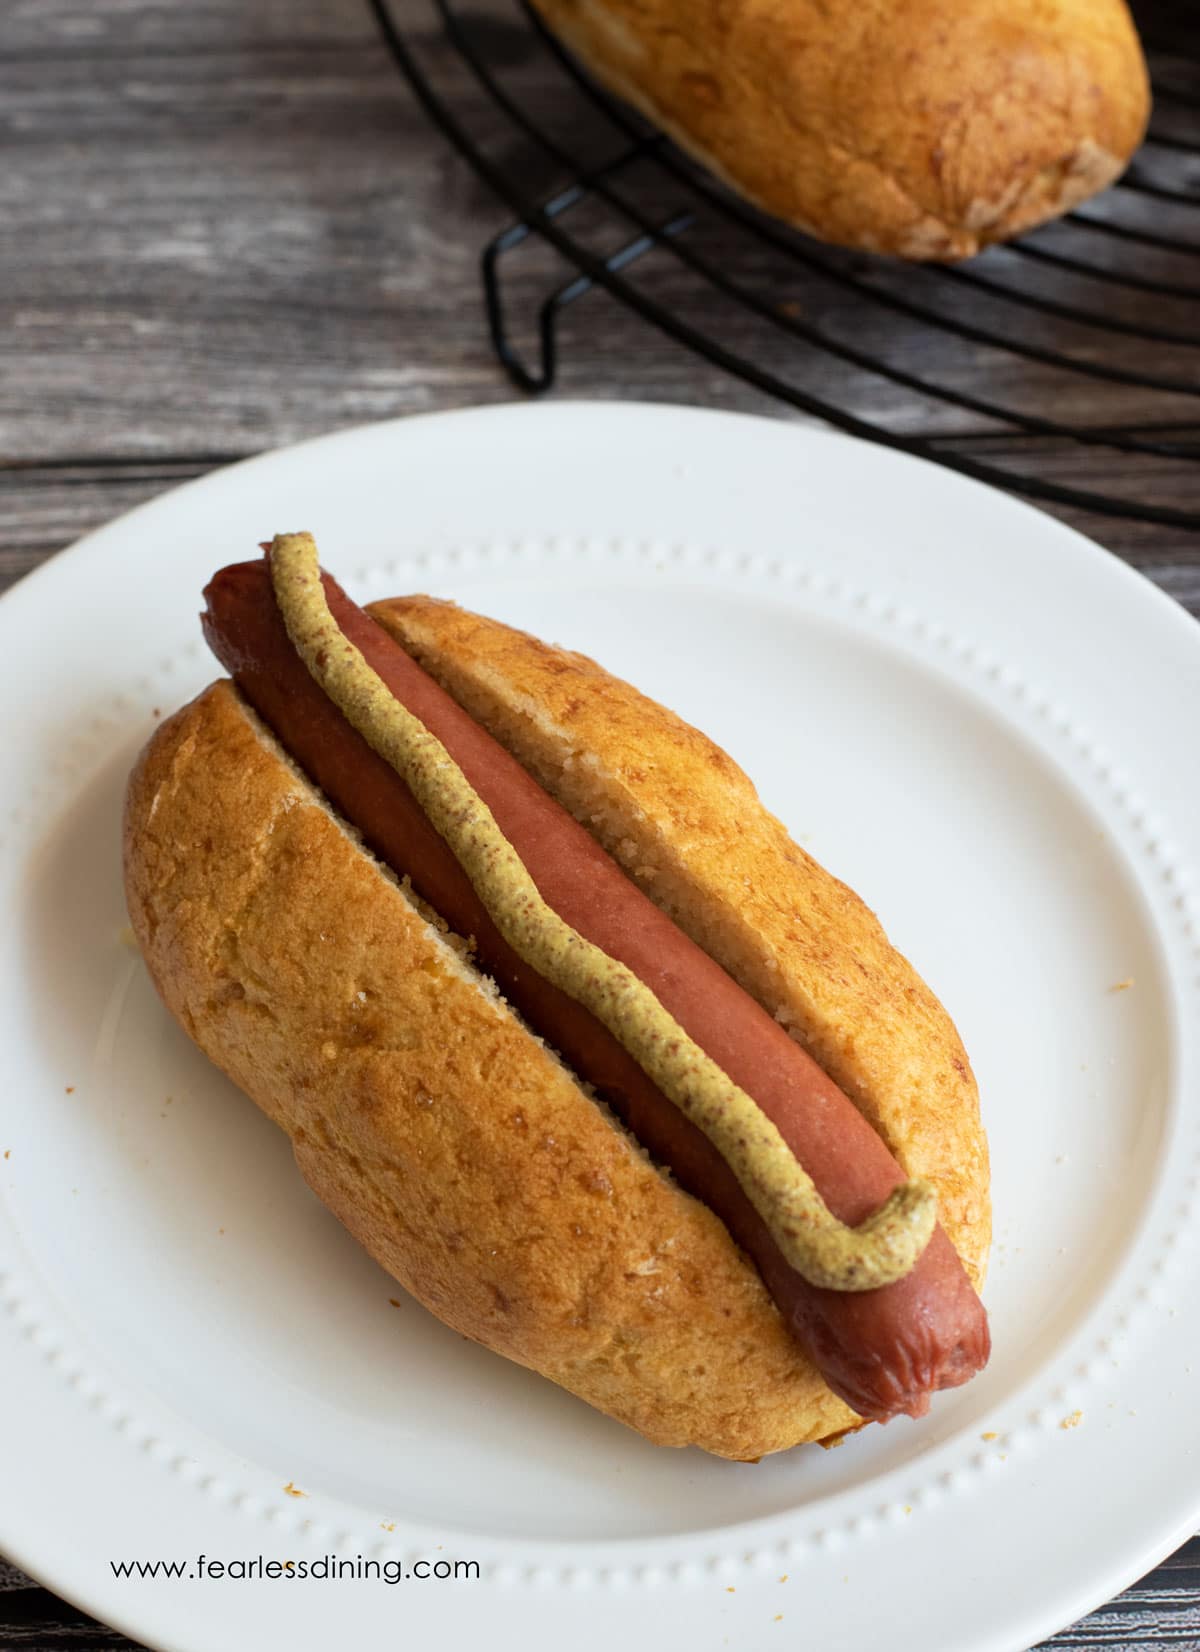 A hot dog in a gluten free hot dog bun on a white plate.